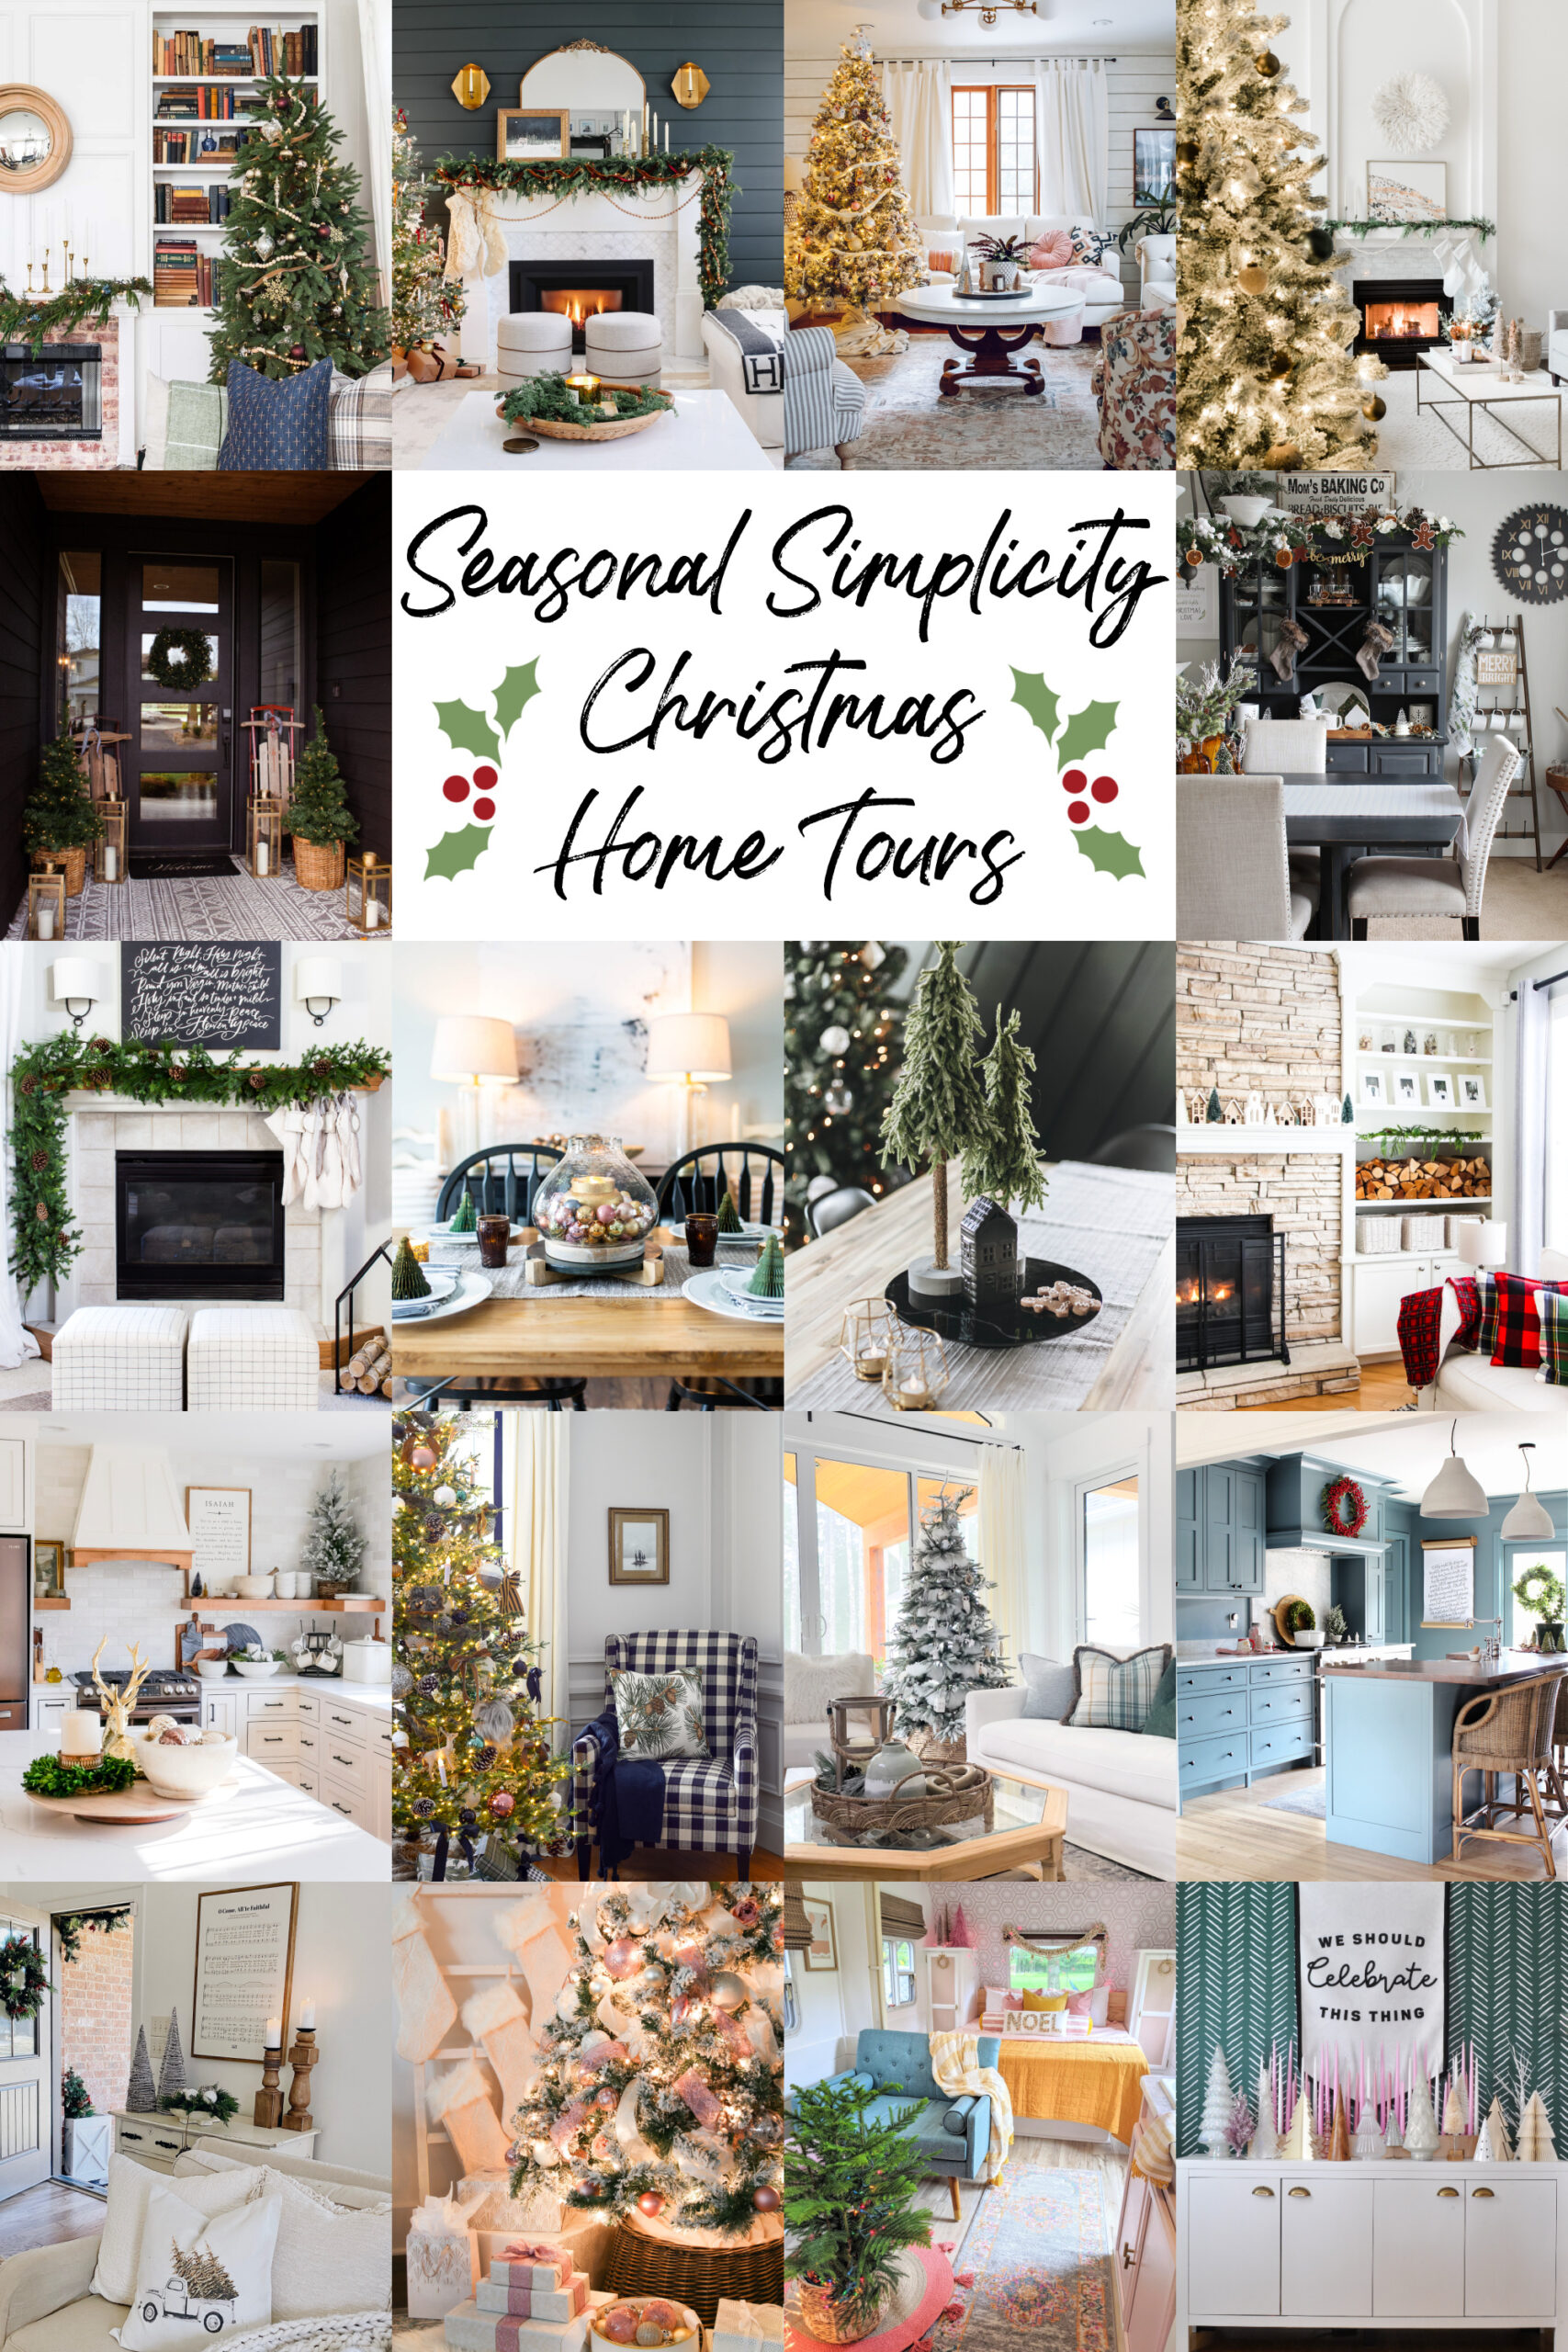 Seasonal Simplicity Christmas Home Tours poster.